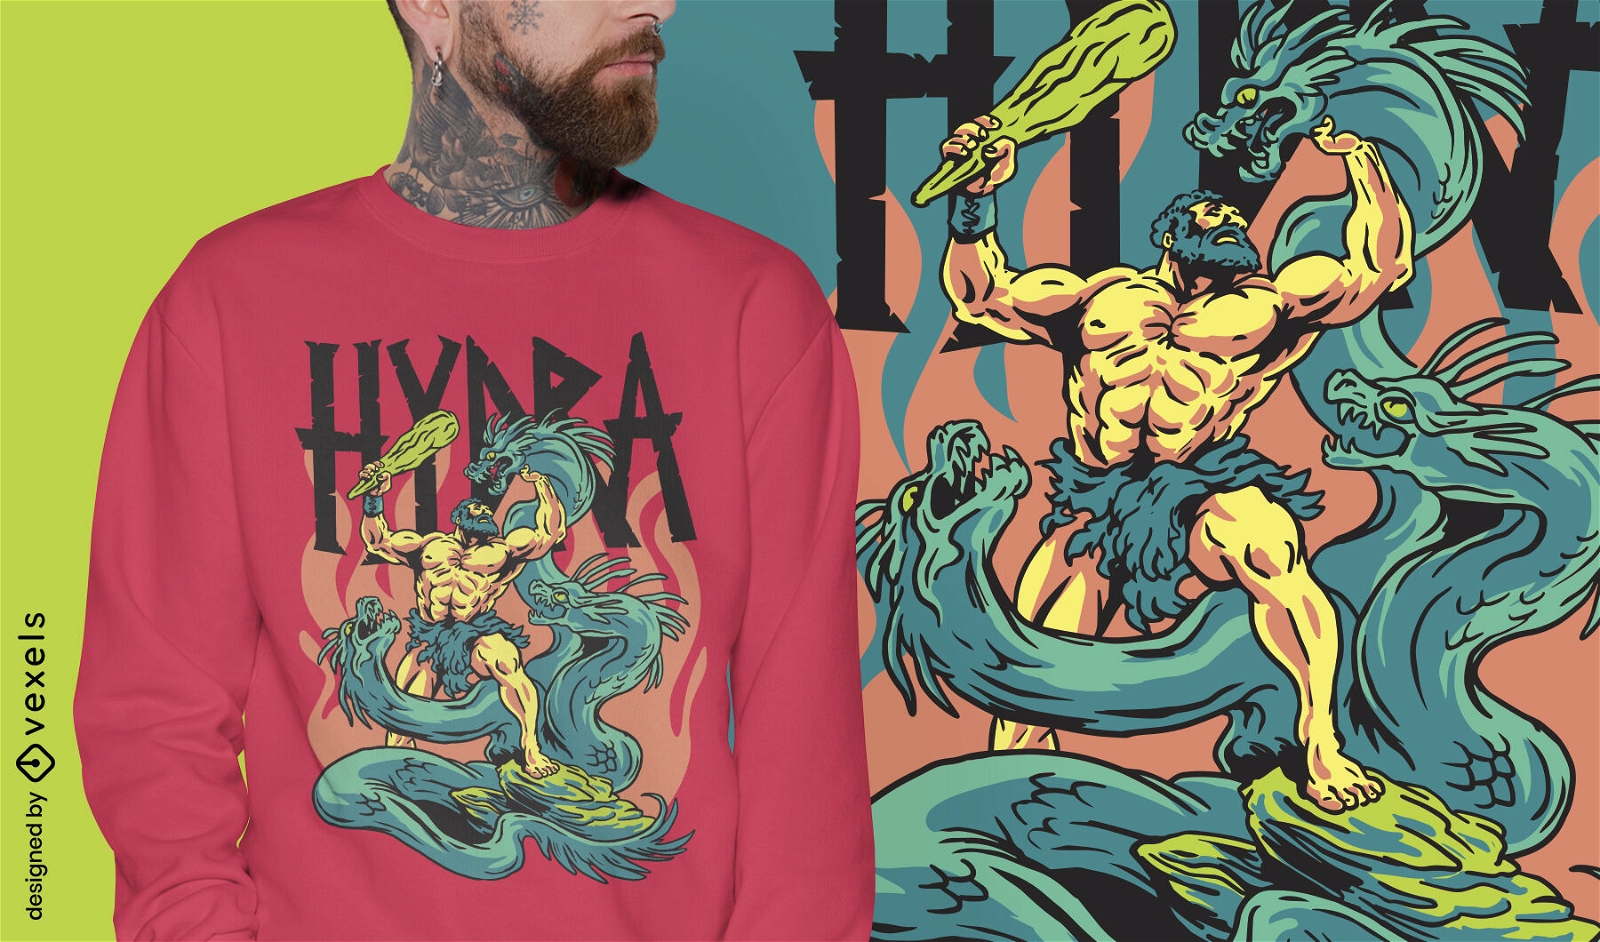 Dise?o de camiseta de grecia m?tica del monstruo de Hydra